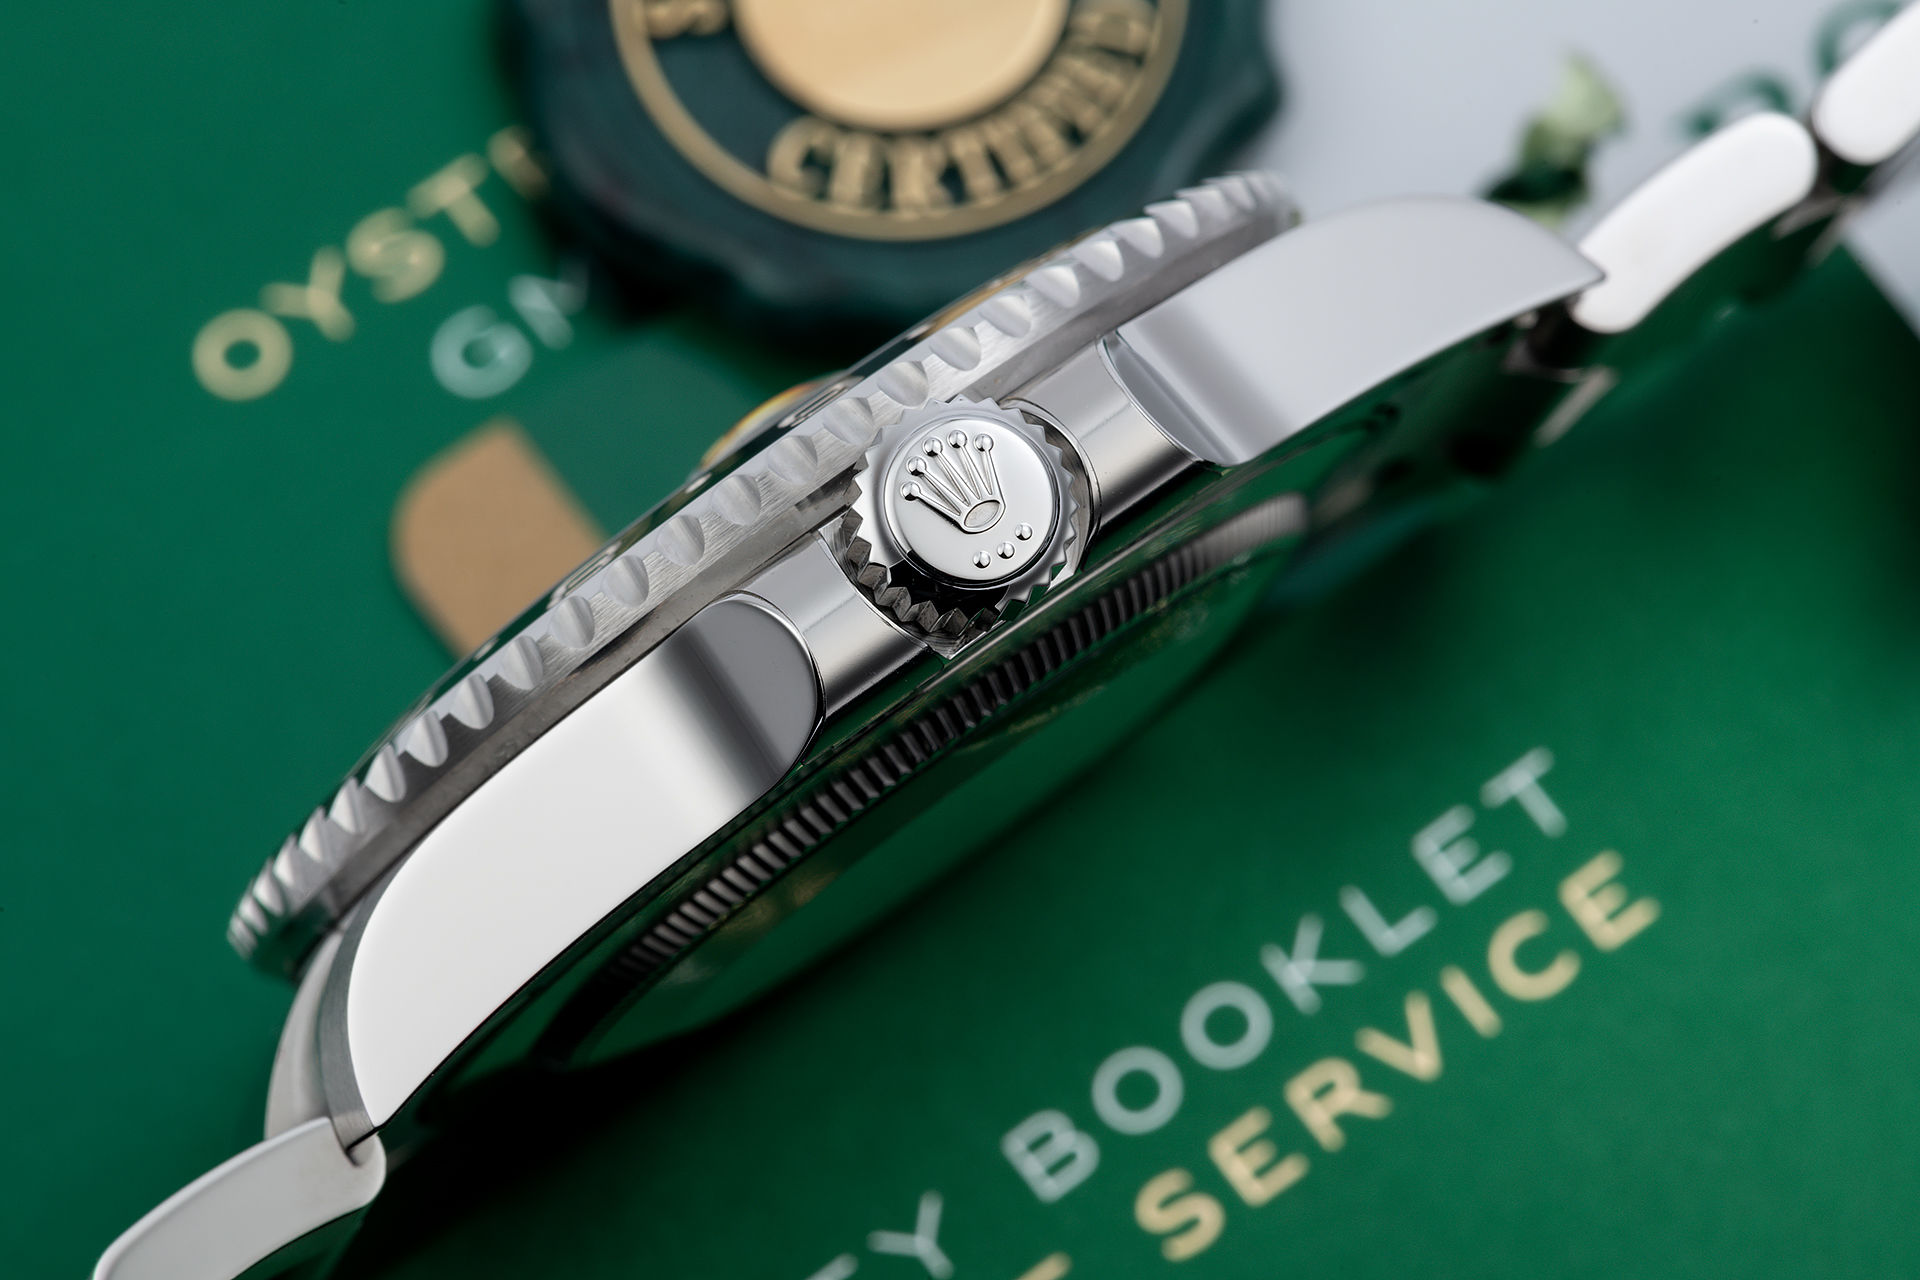 ref 116710LN | 5 Year Warranty 'Totally Complete' | Rolex GMT-Master II